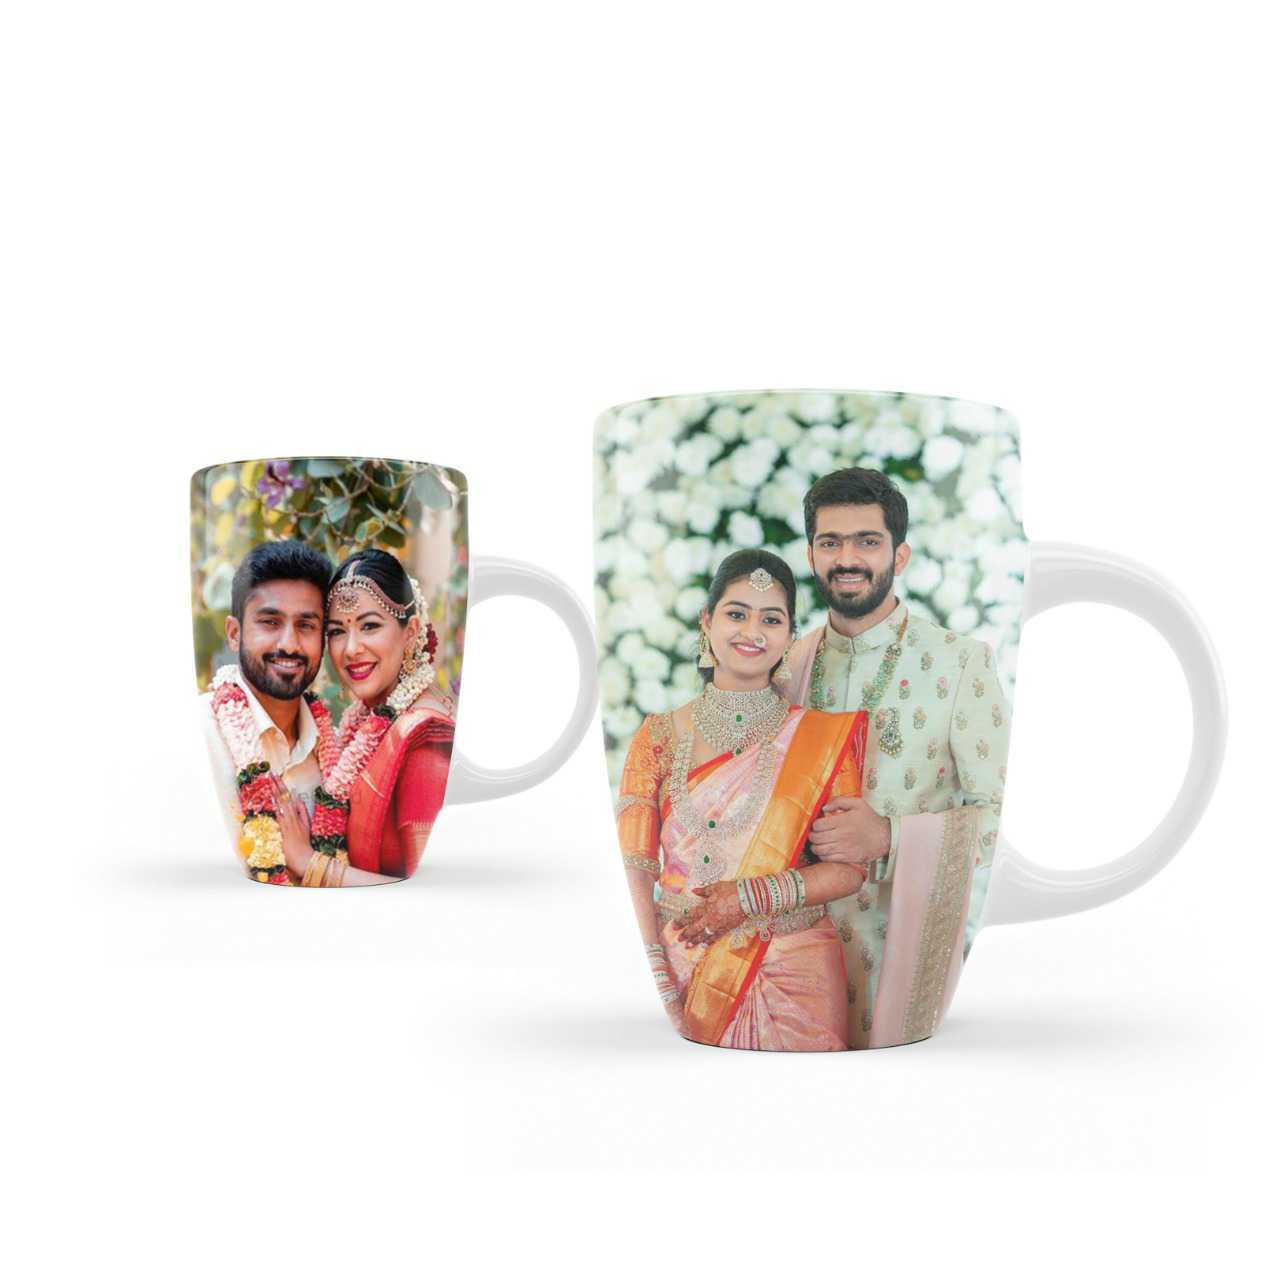 customise photo coffee mugs